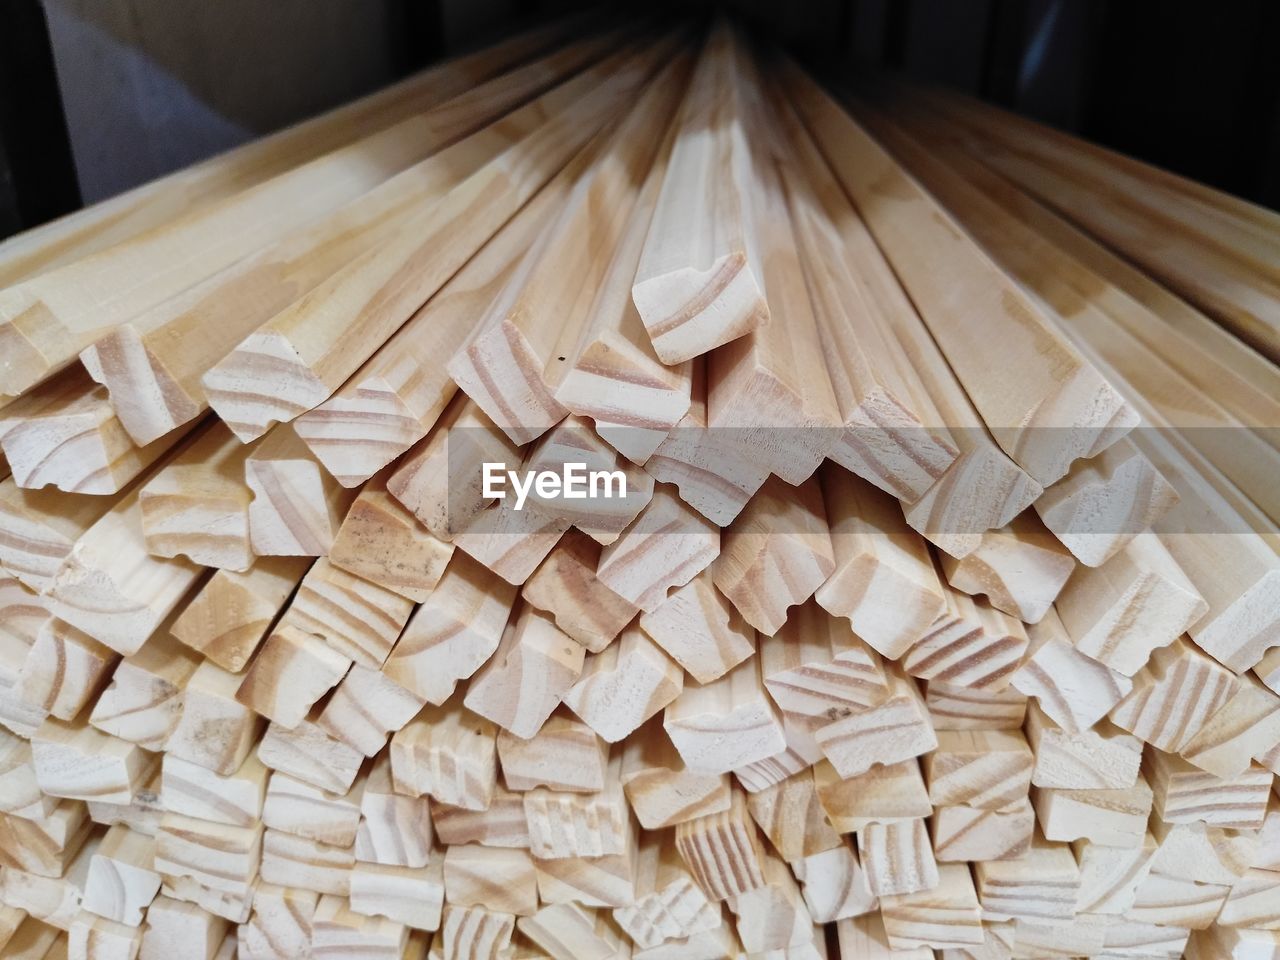 A pile of wood sticks